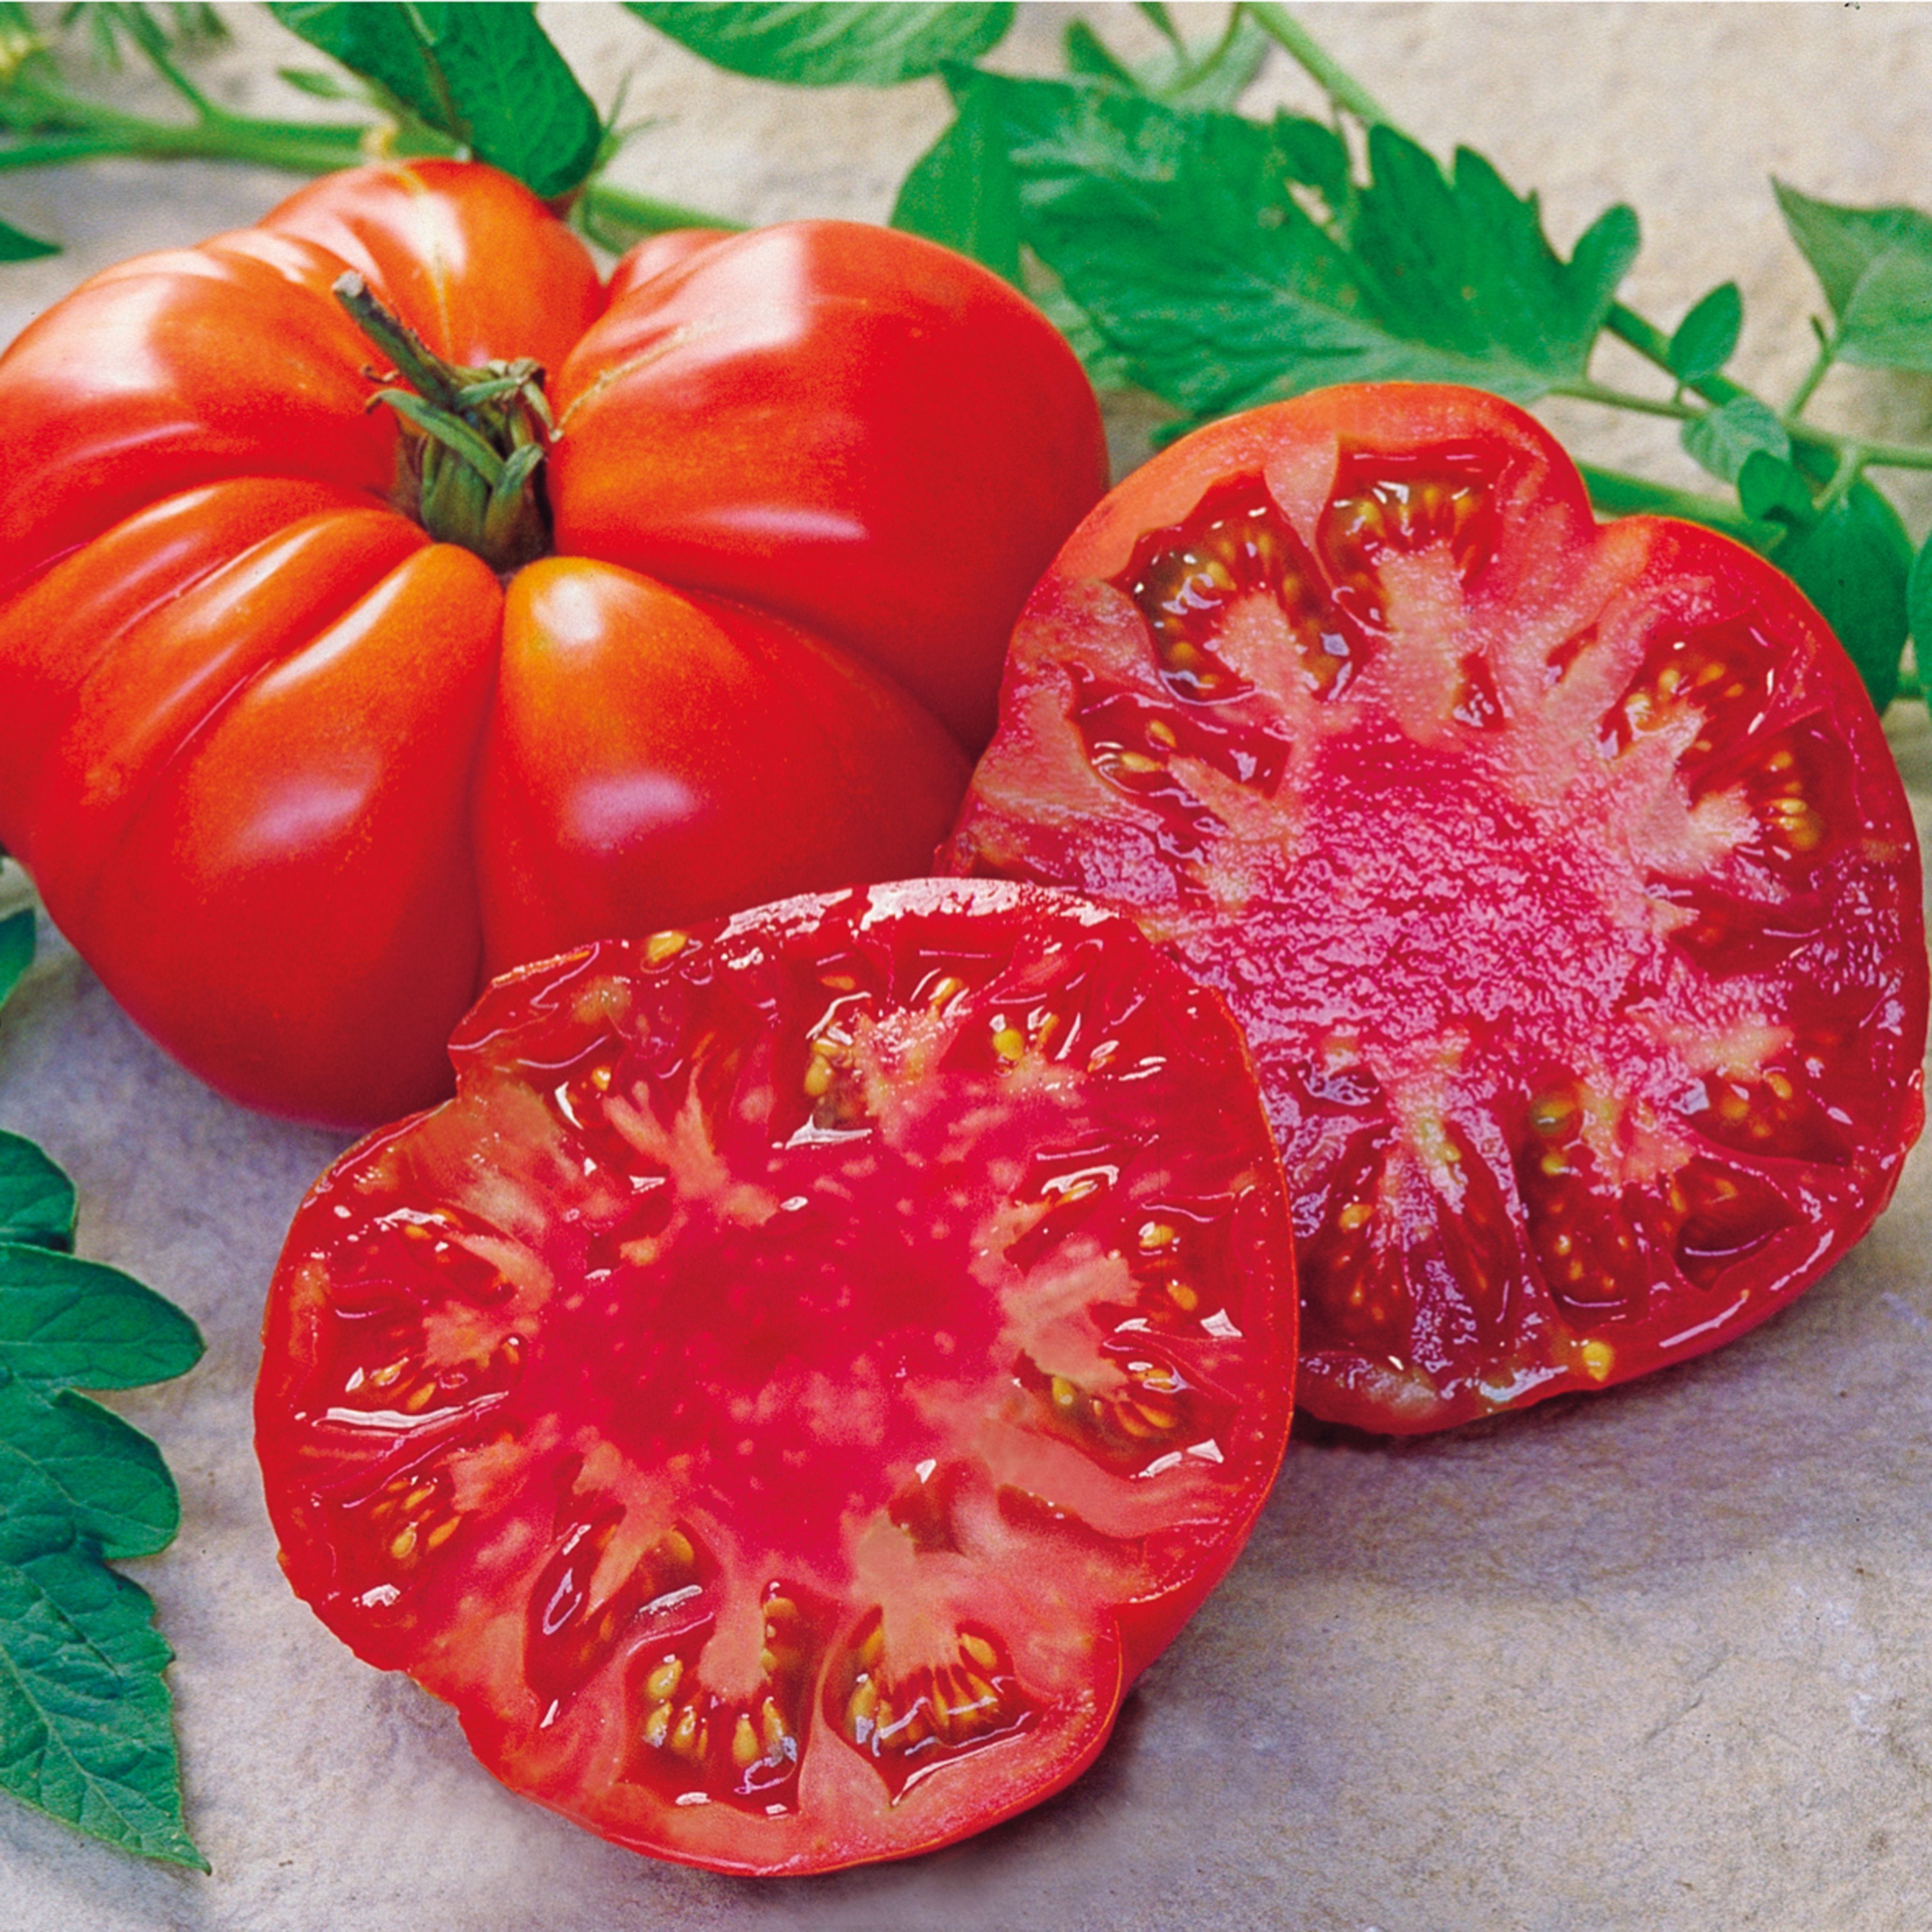 RHS Tomande F1 Tomato Seed